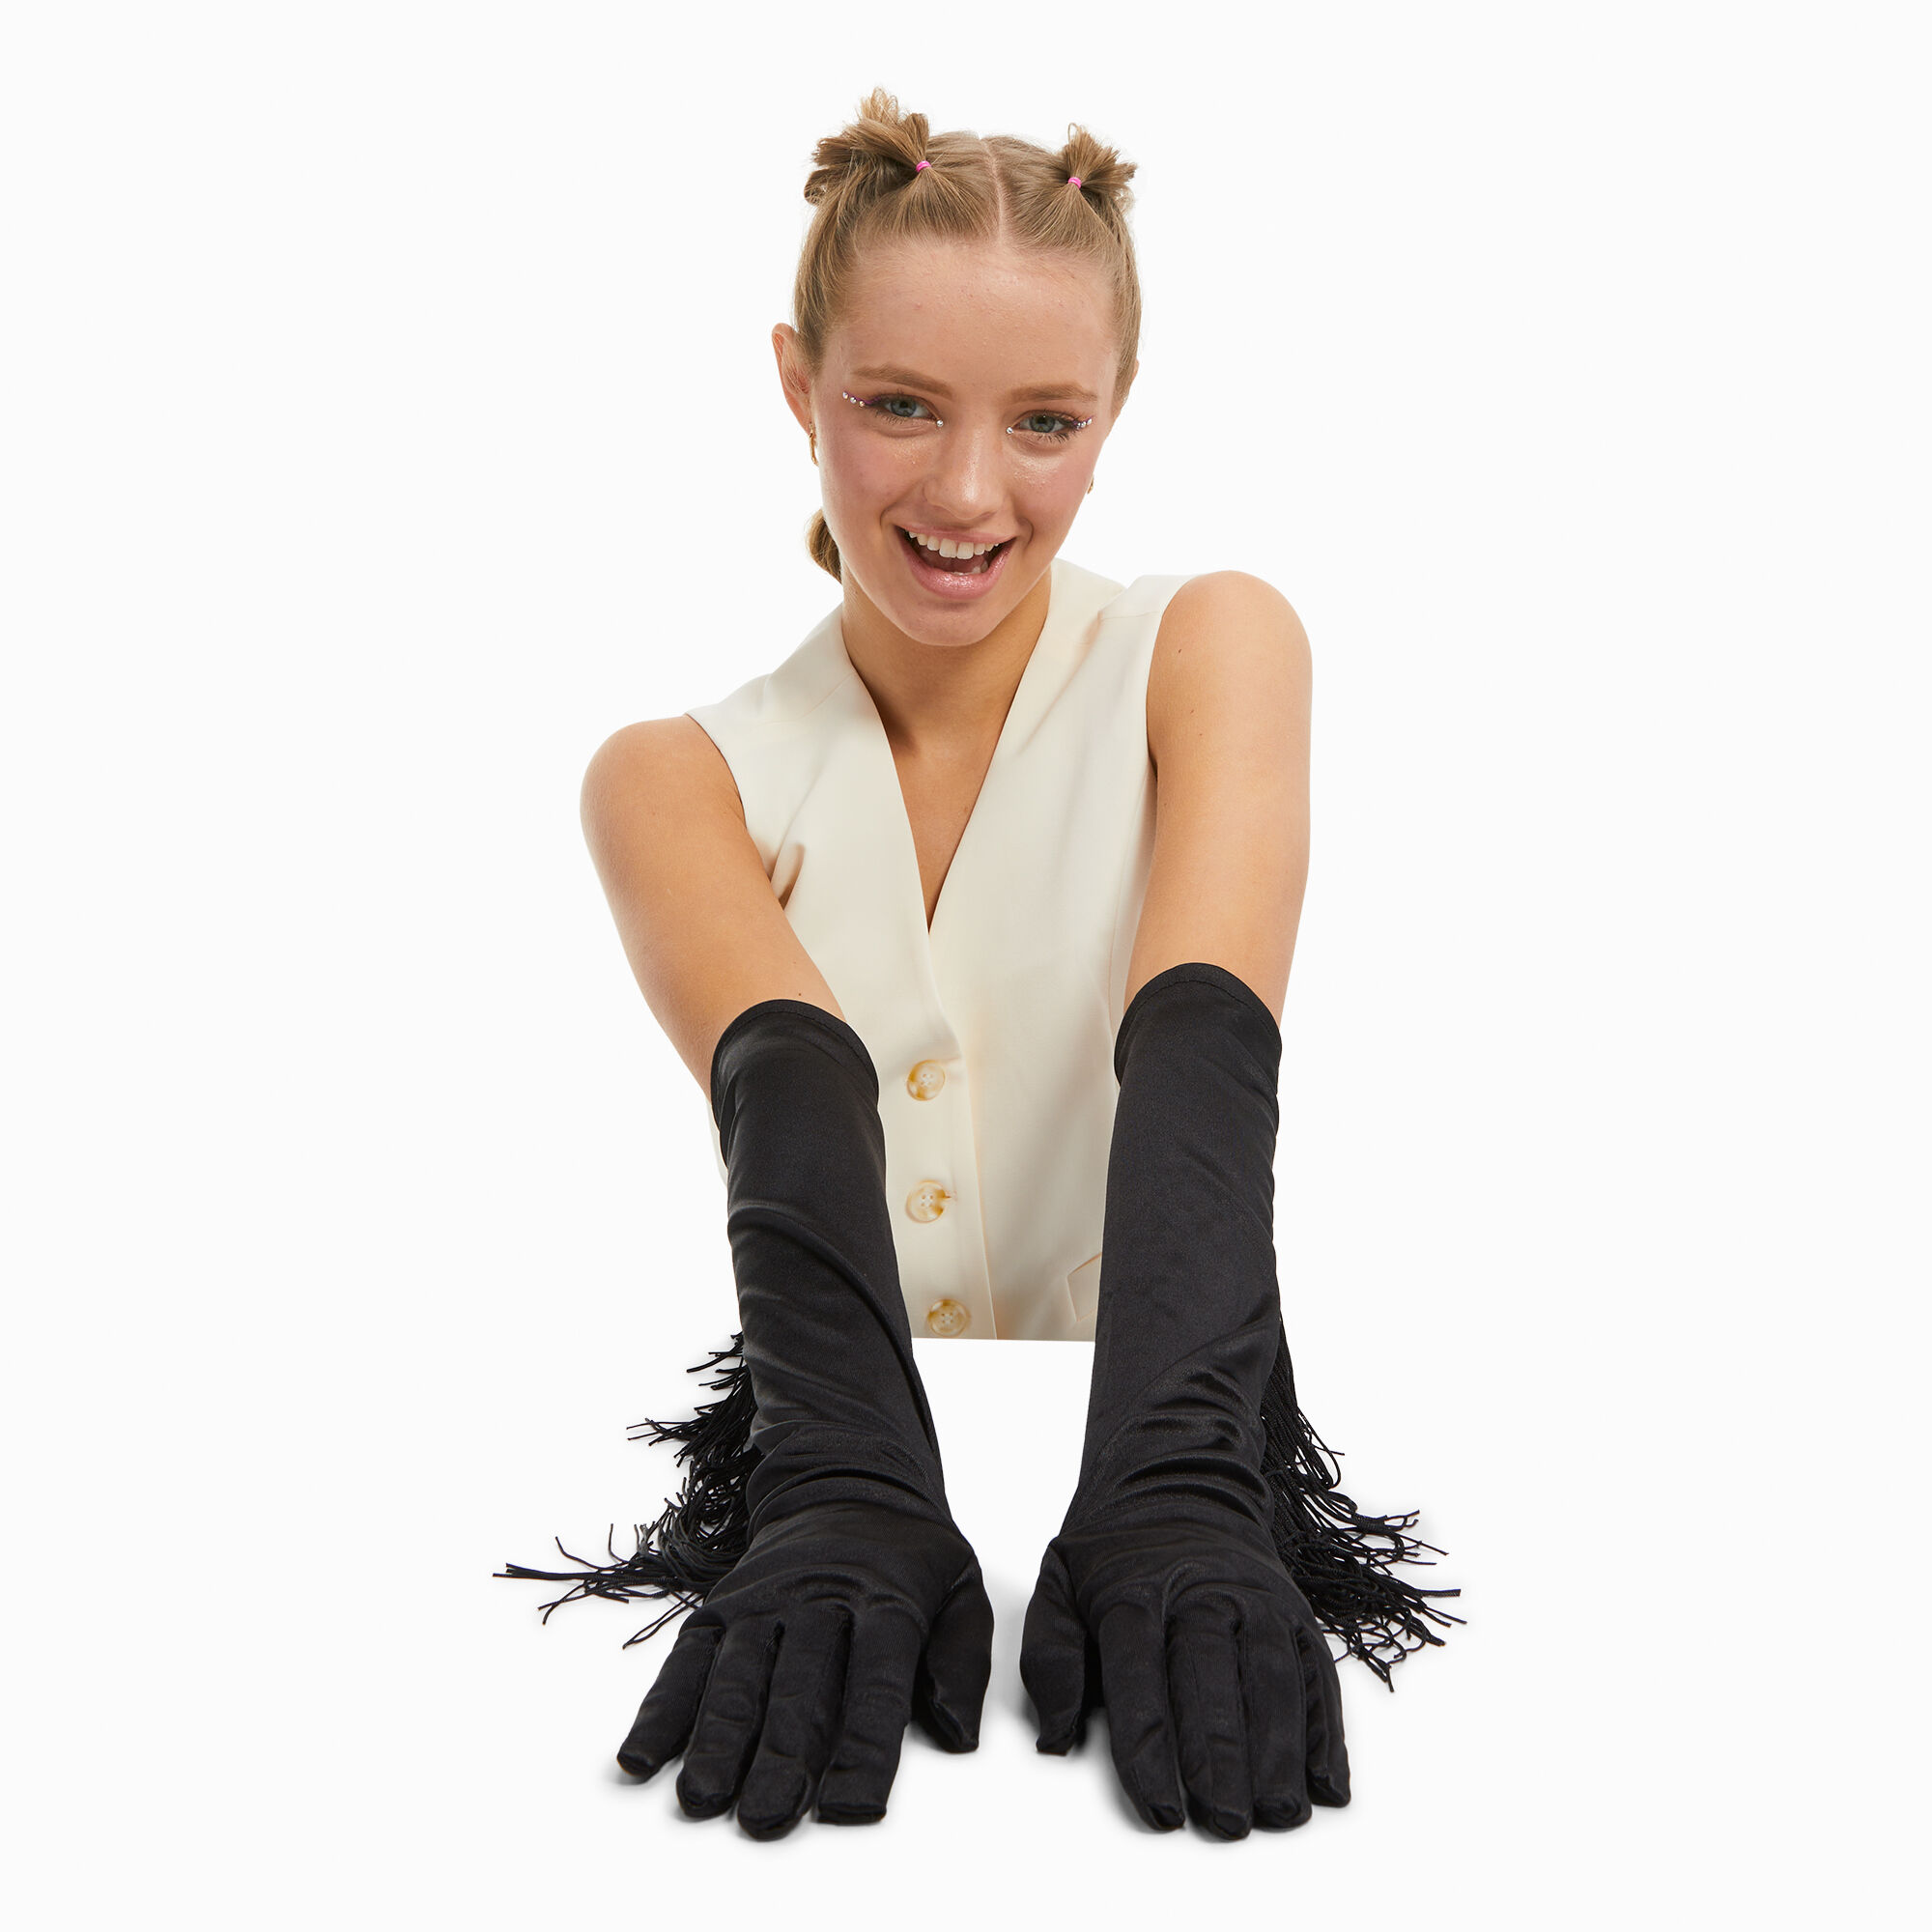 View Claires Fringe Long Gloves Black information